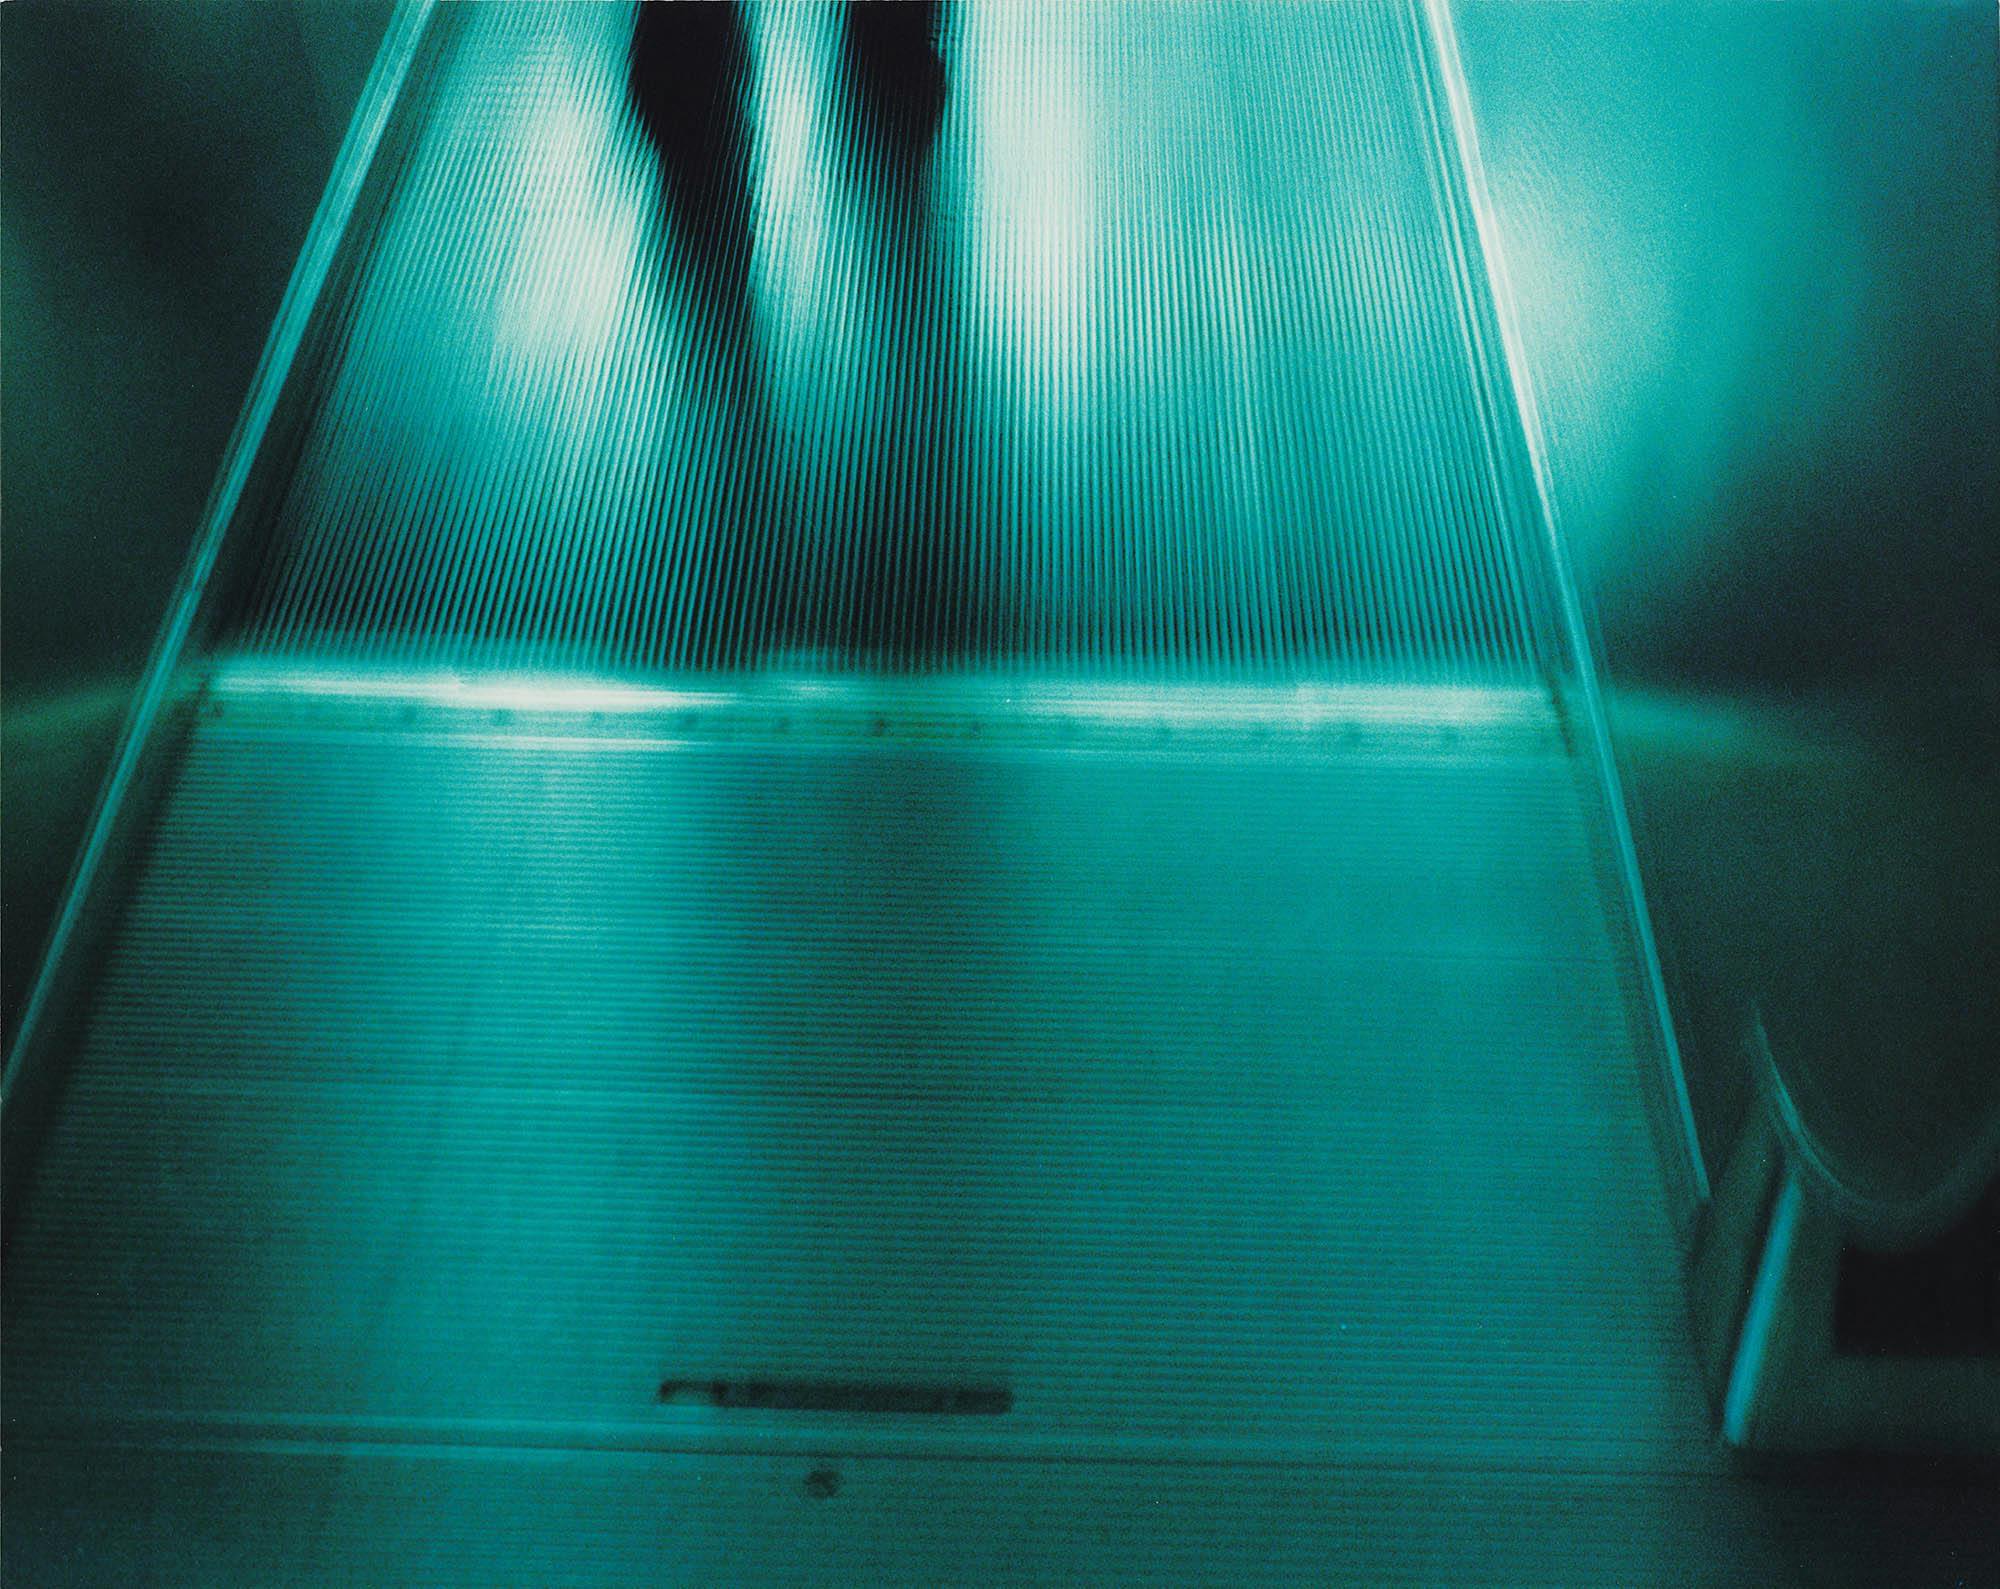 Adler Guerrier, Untitled (Airport), 2000